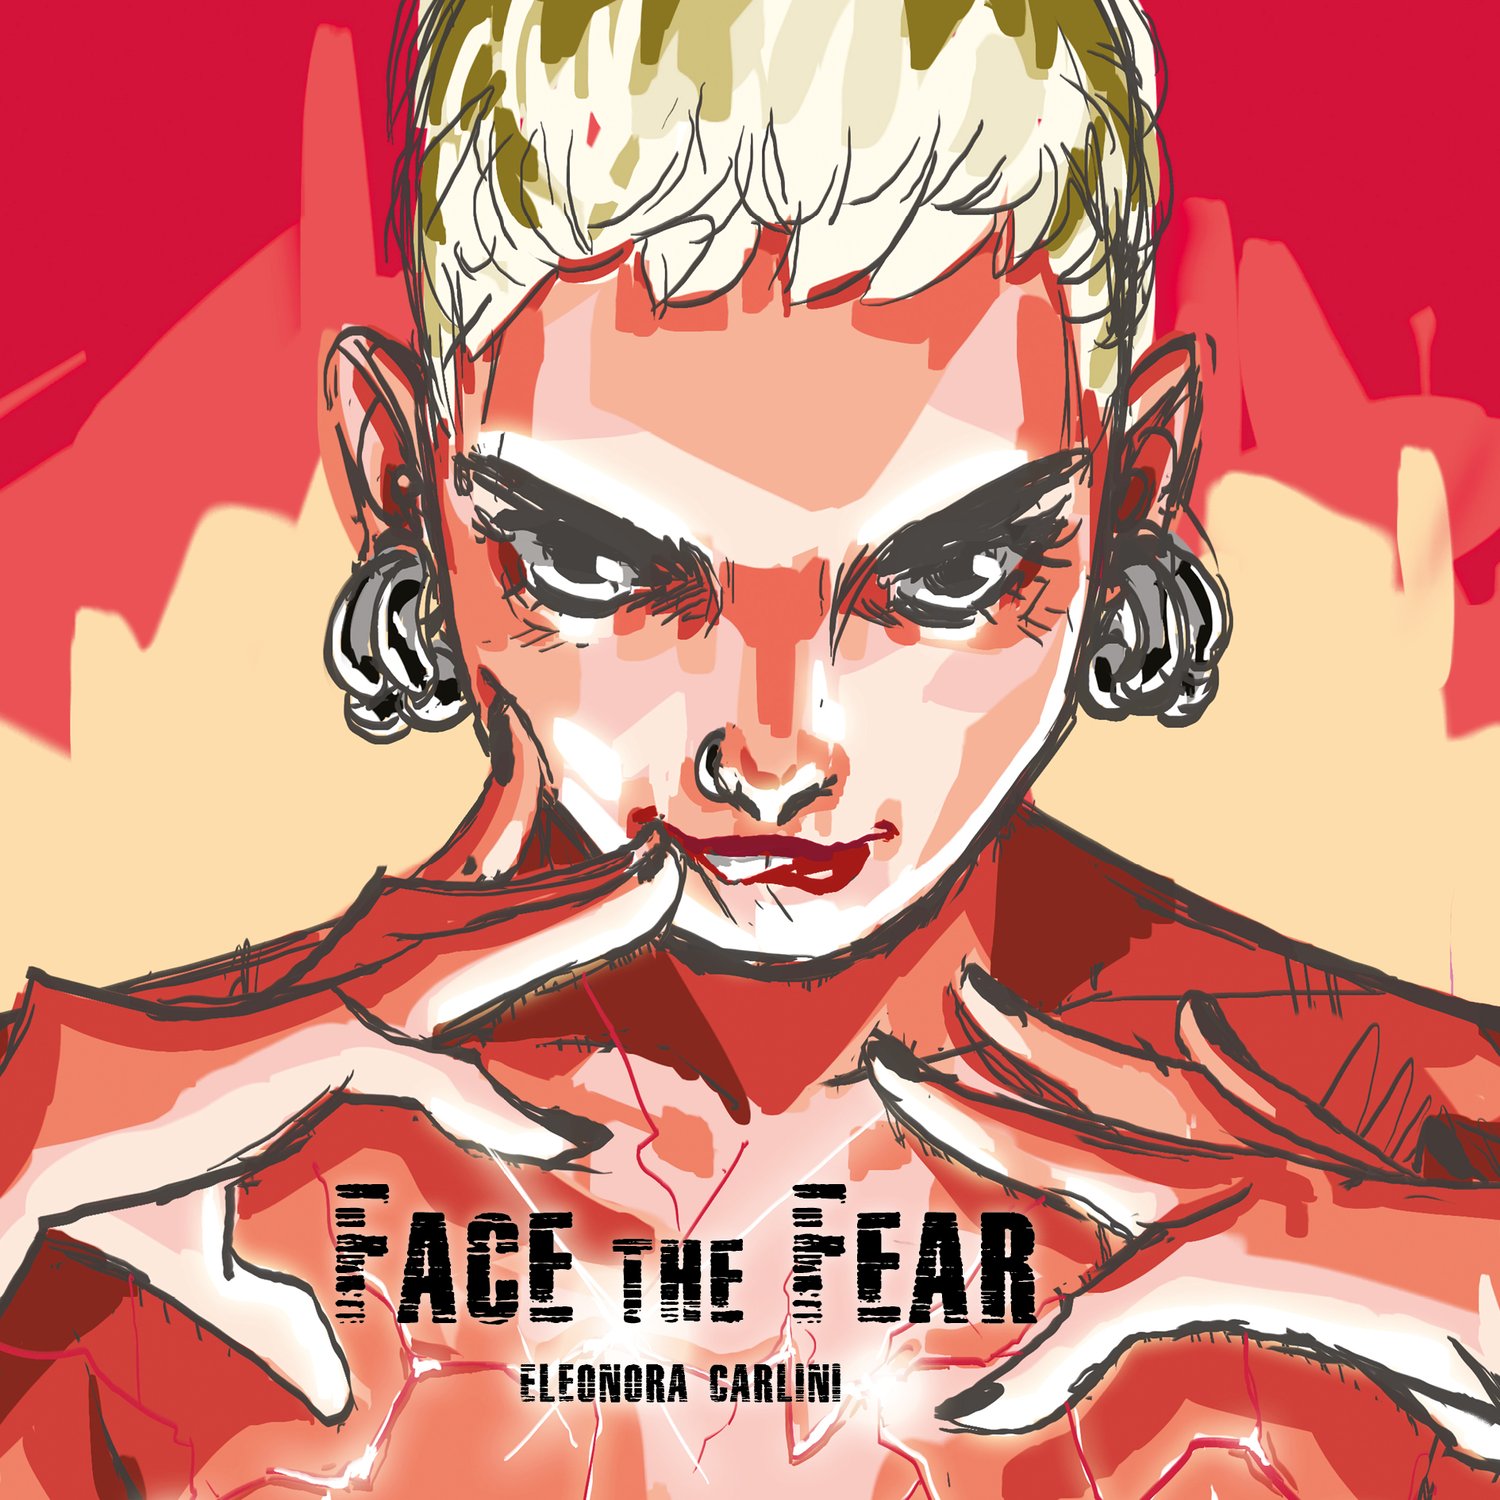 Image of Face the Fear - Eleonora Carlini - RED version